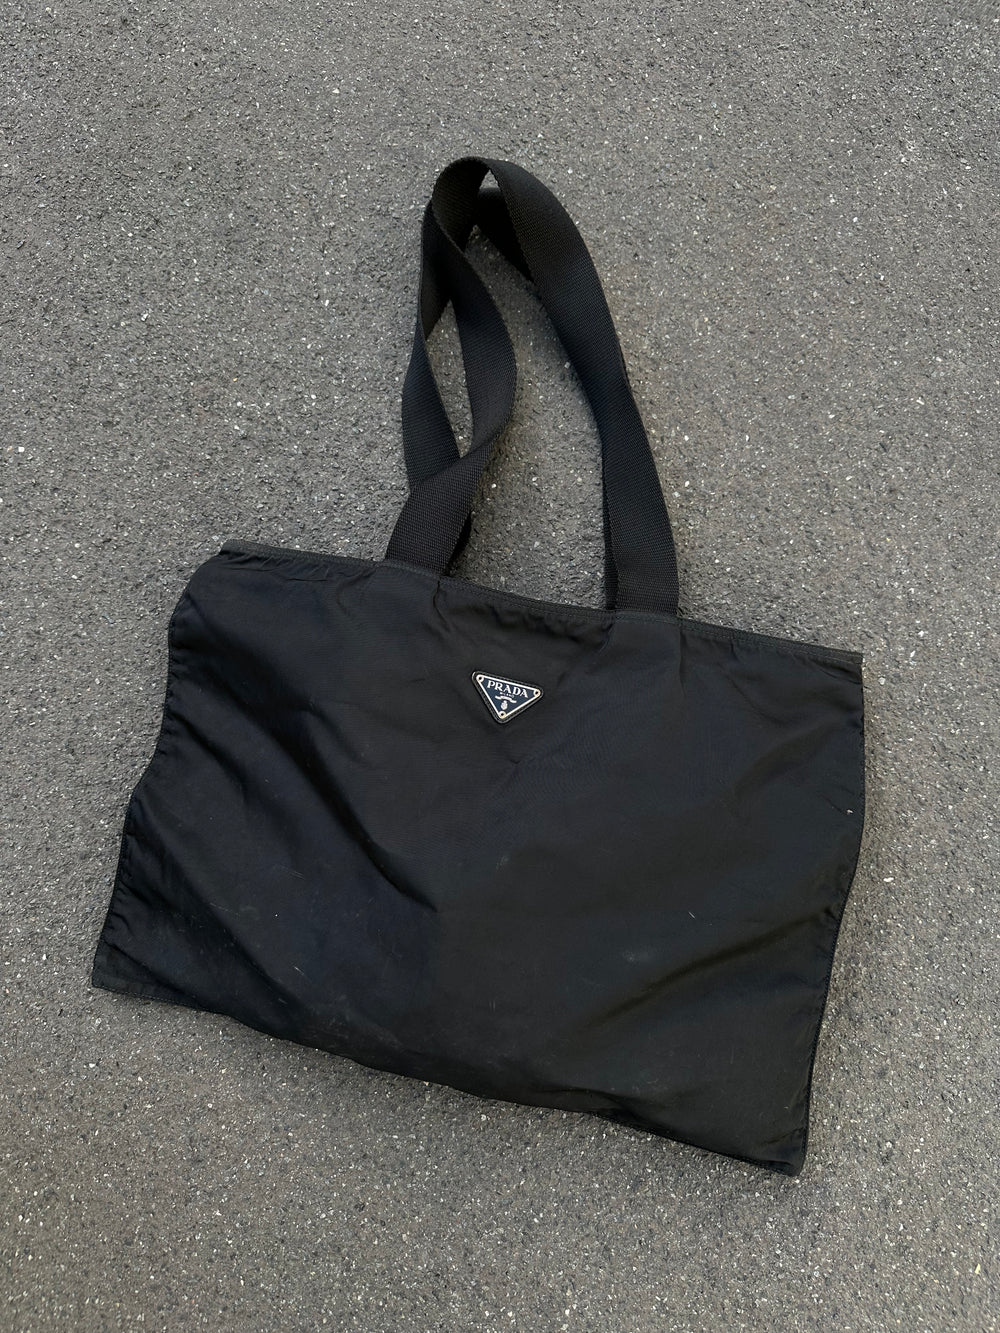 Early 2000s Prada Shopping / Tote Bag